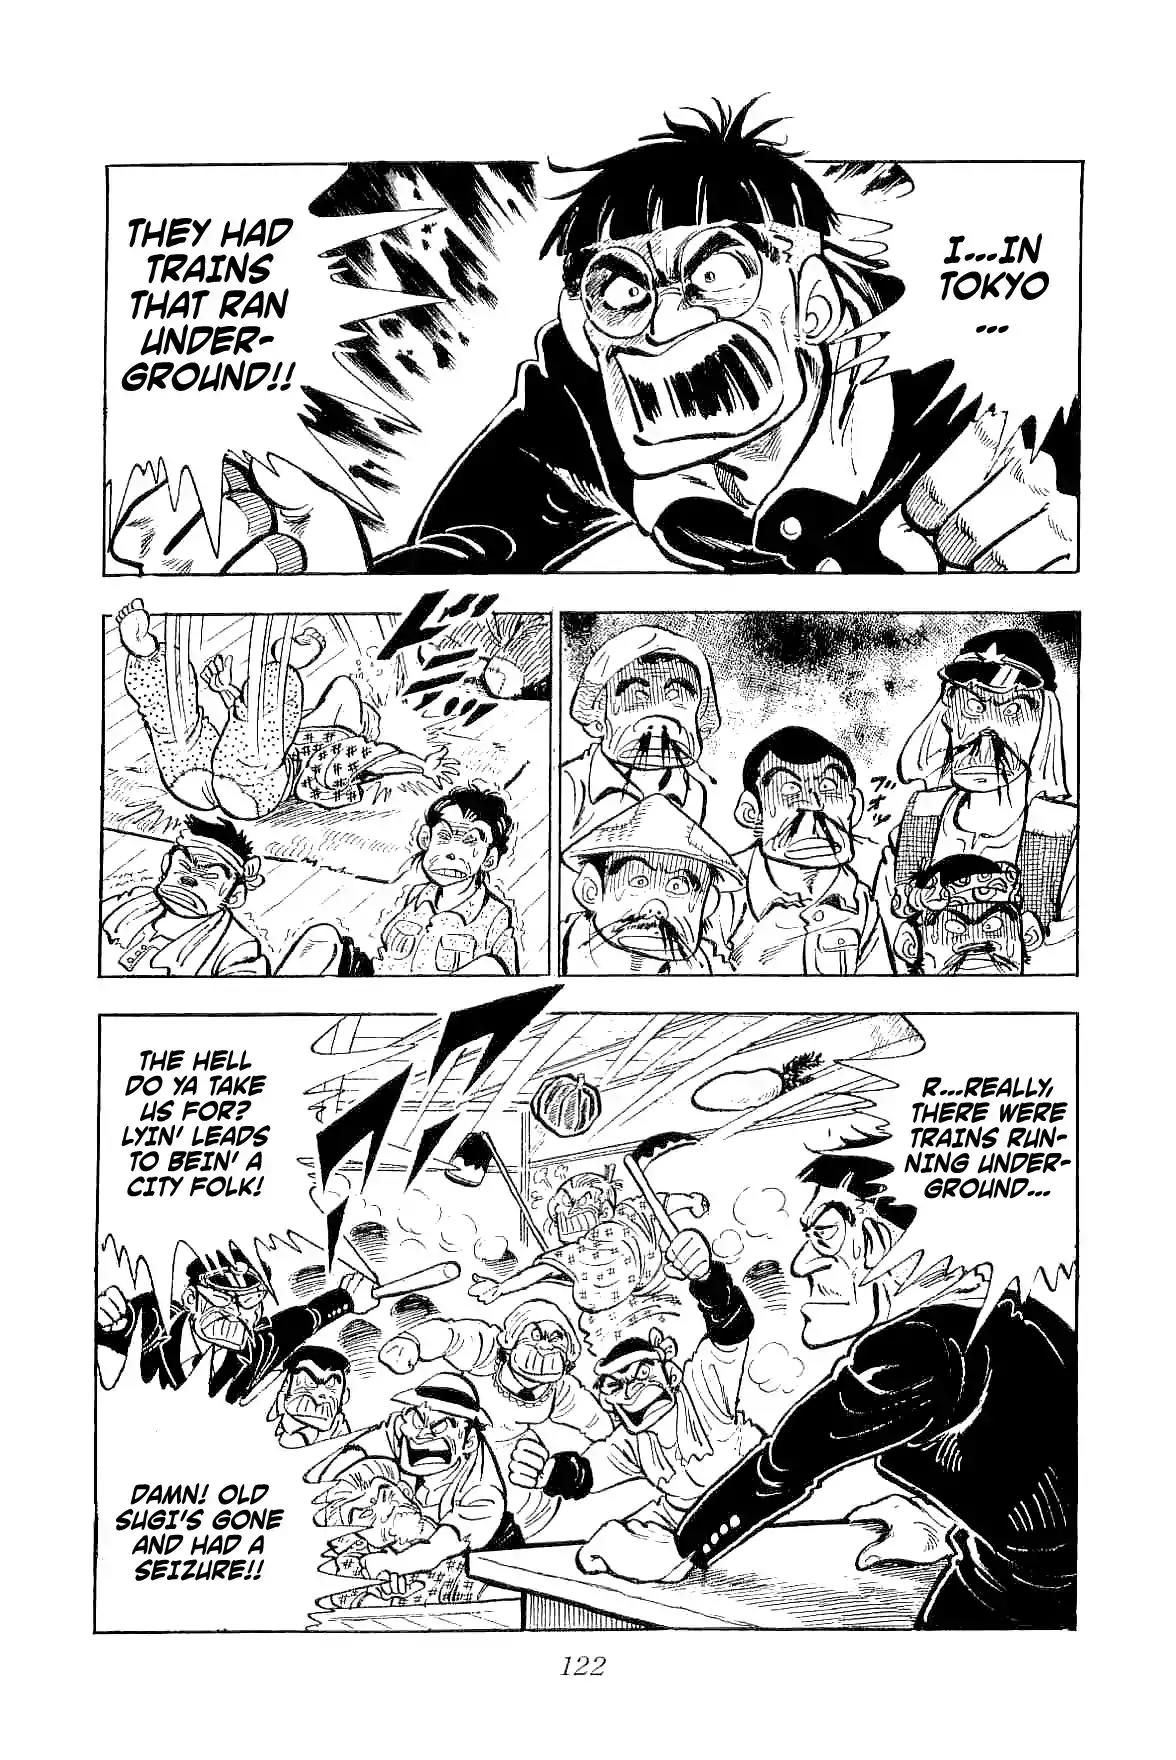 Rage!! The Gokutora Family Vol.1 Chapter 3: